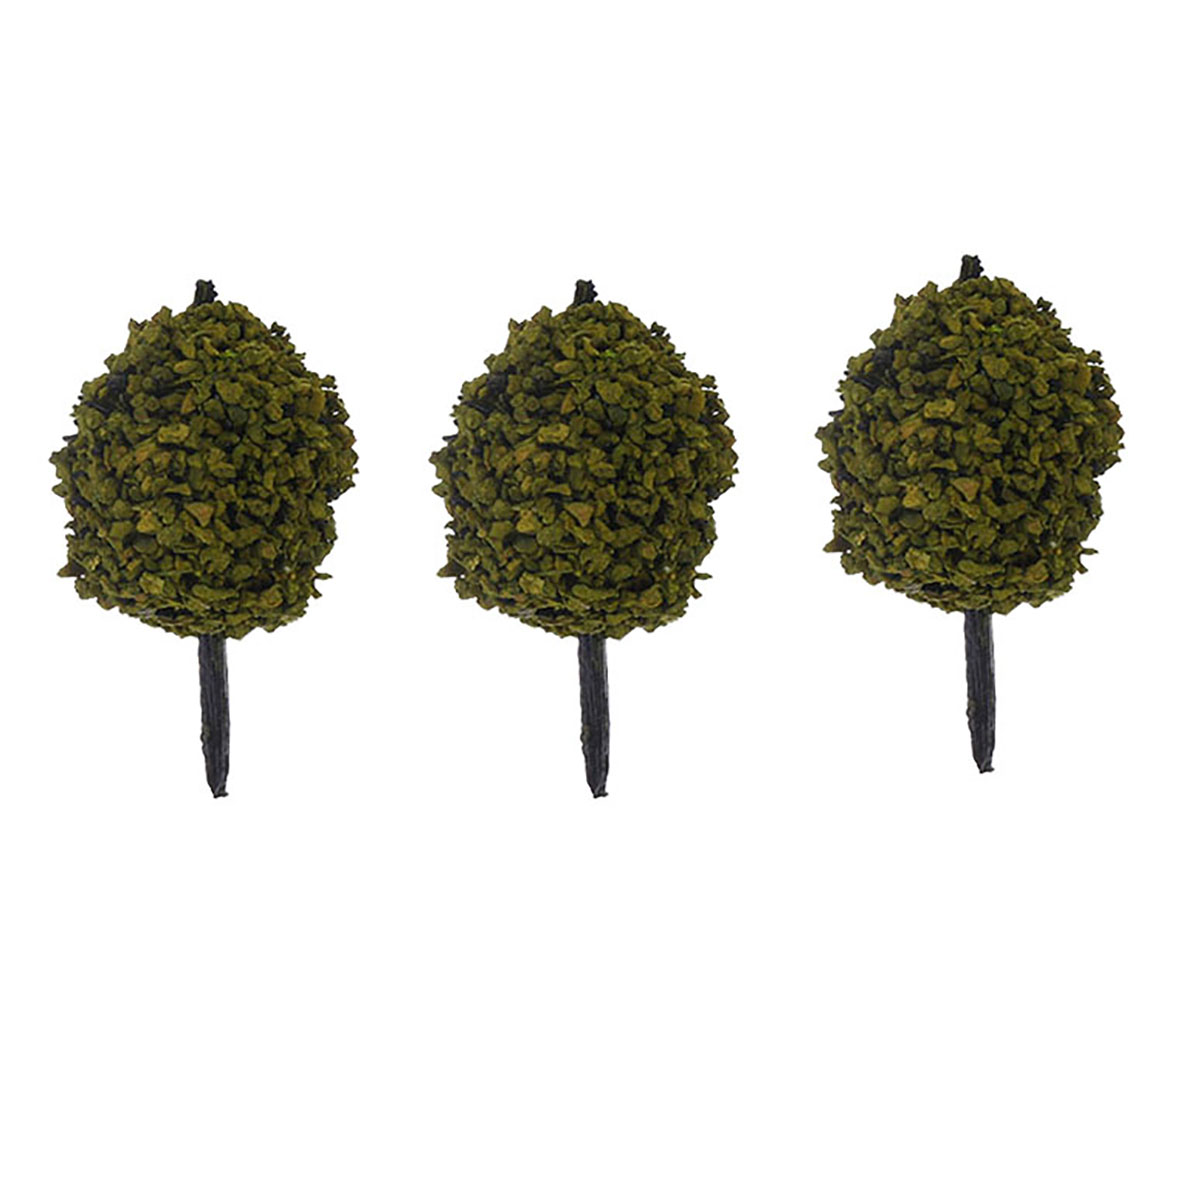 12Pcs-Simulation-Bush-Tree-Scene-Model-Mini-Landscape-Railway-Scale-Model-Tree-Sand-Table-Decoration-1646789